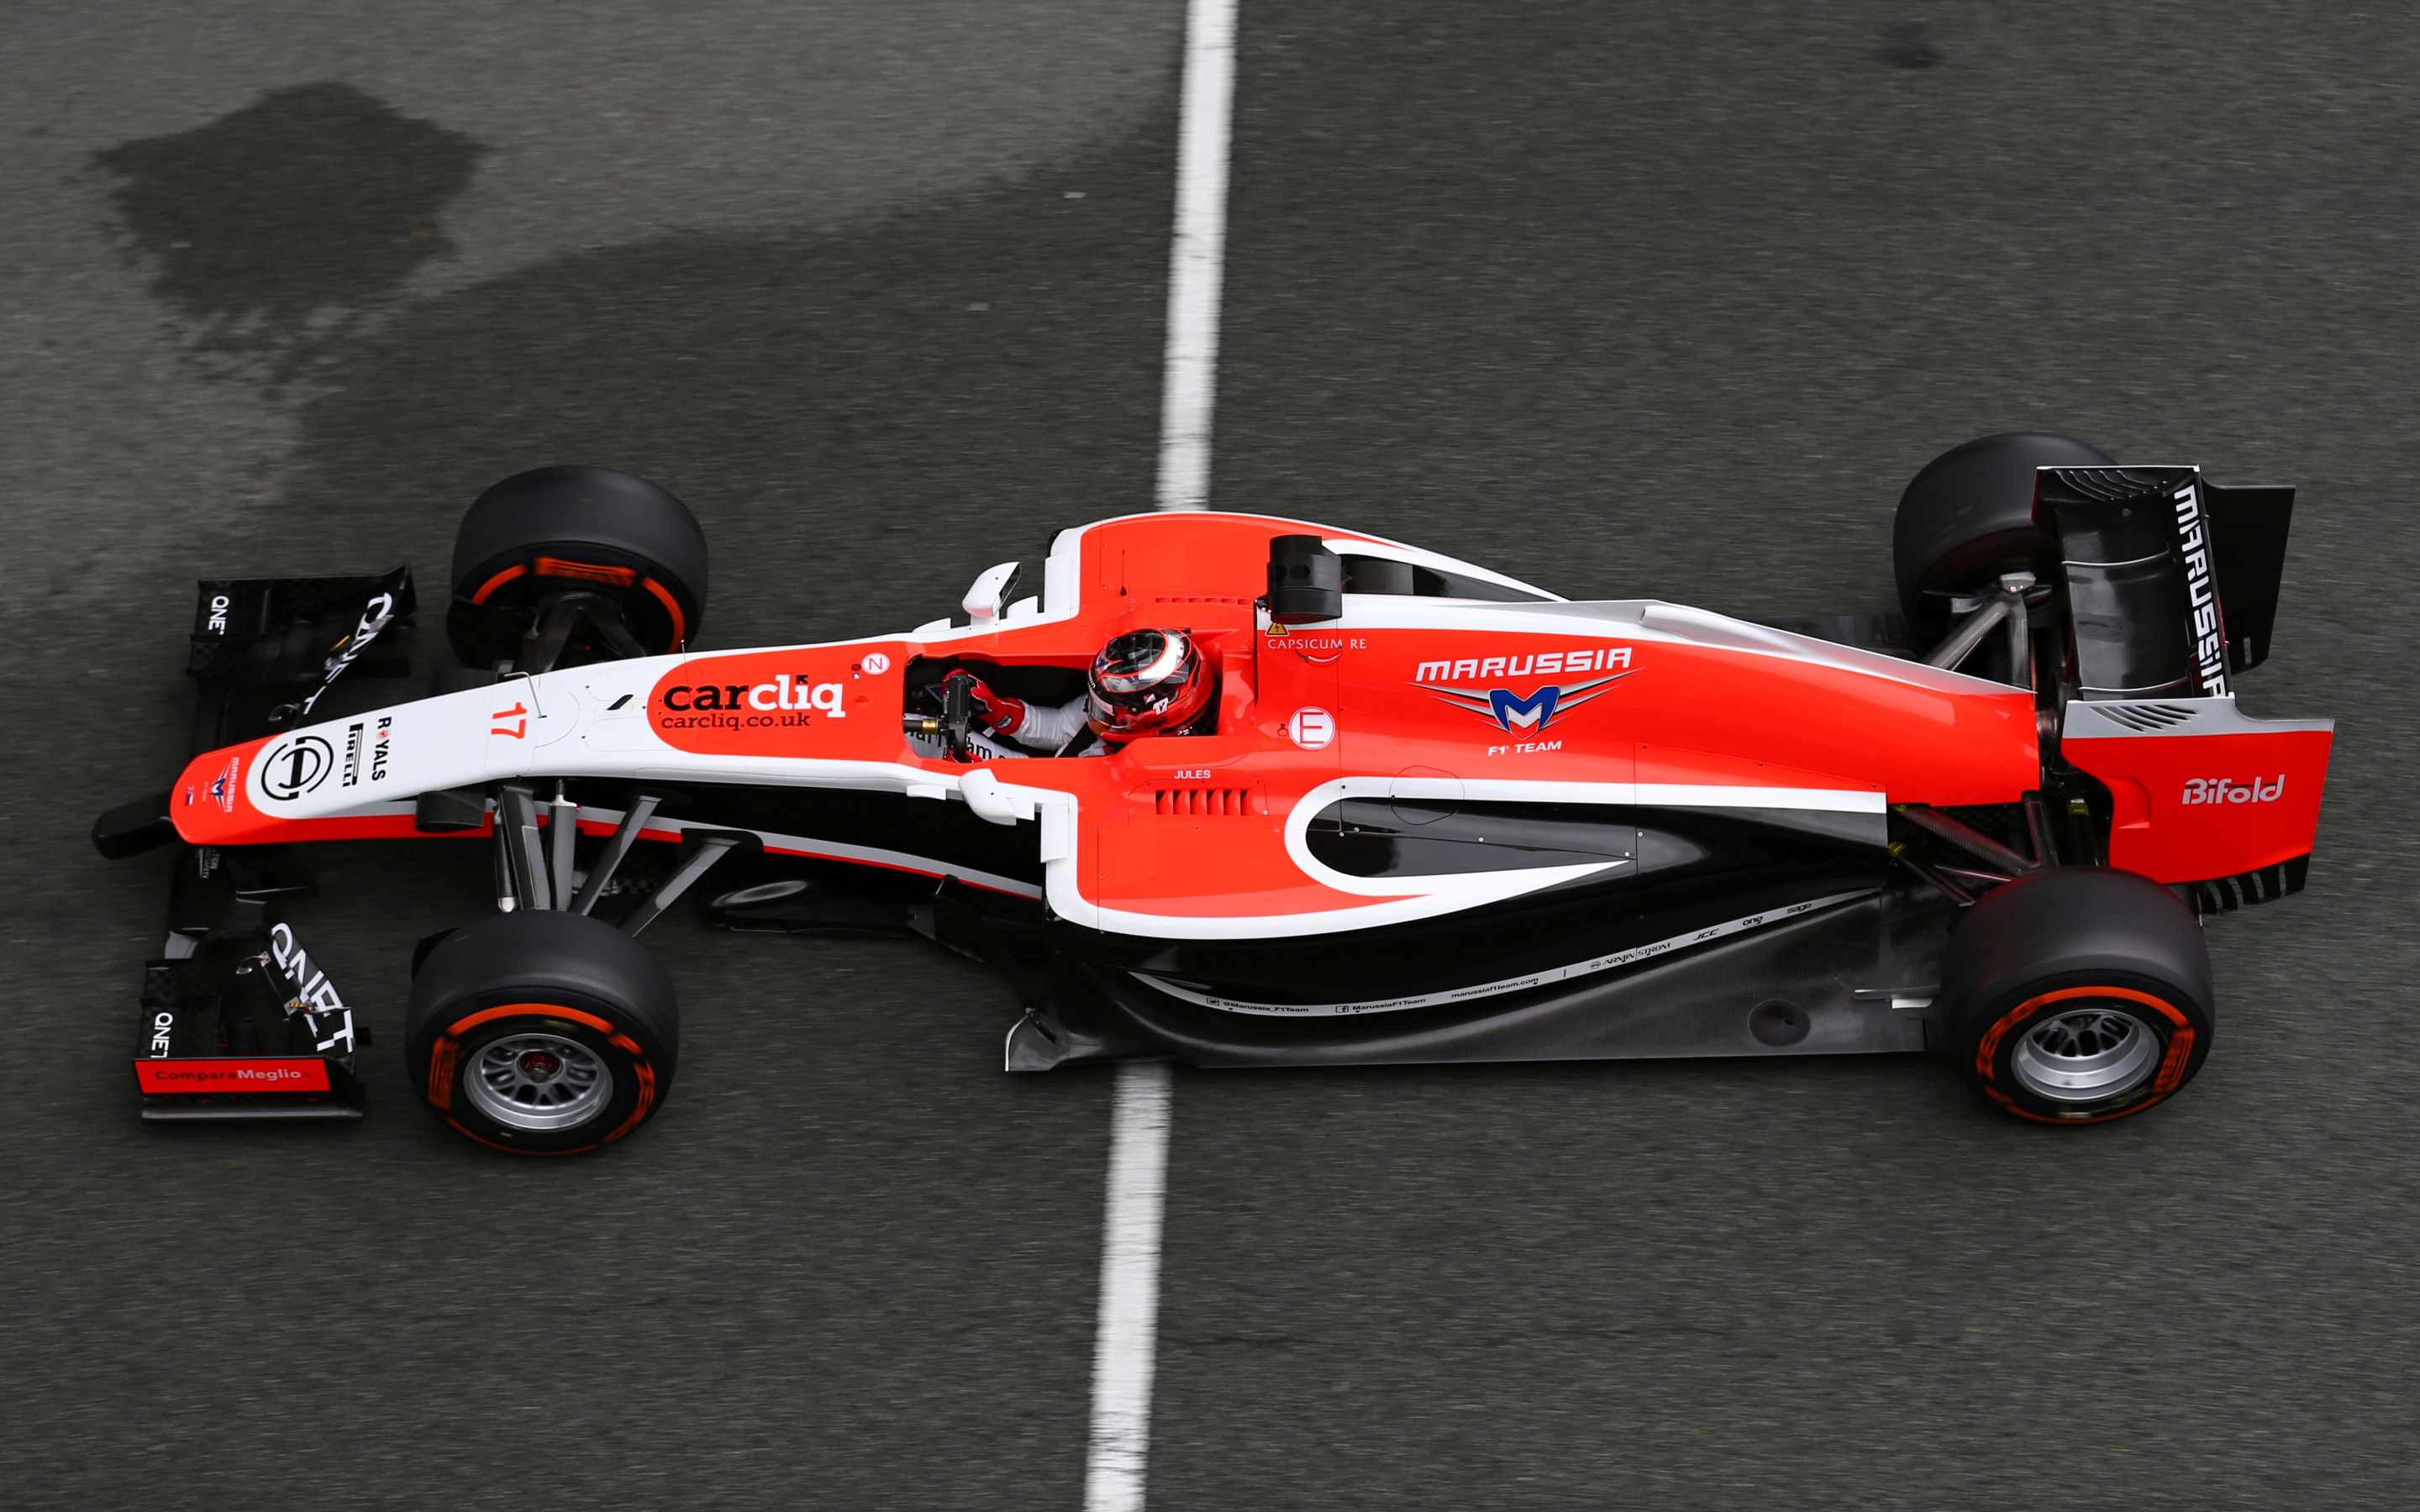 Teams 3 to 3 sport. Marussia mr03. Marussia f1 2014. Marussia f1 Team.